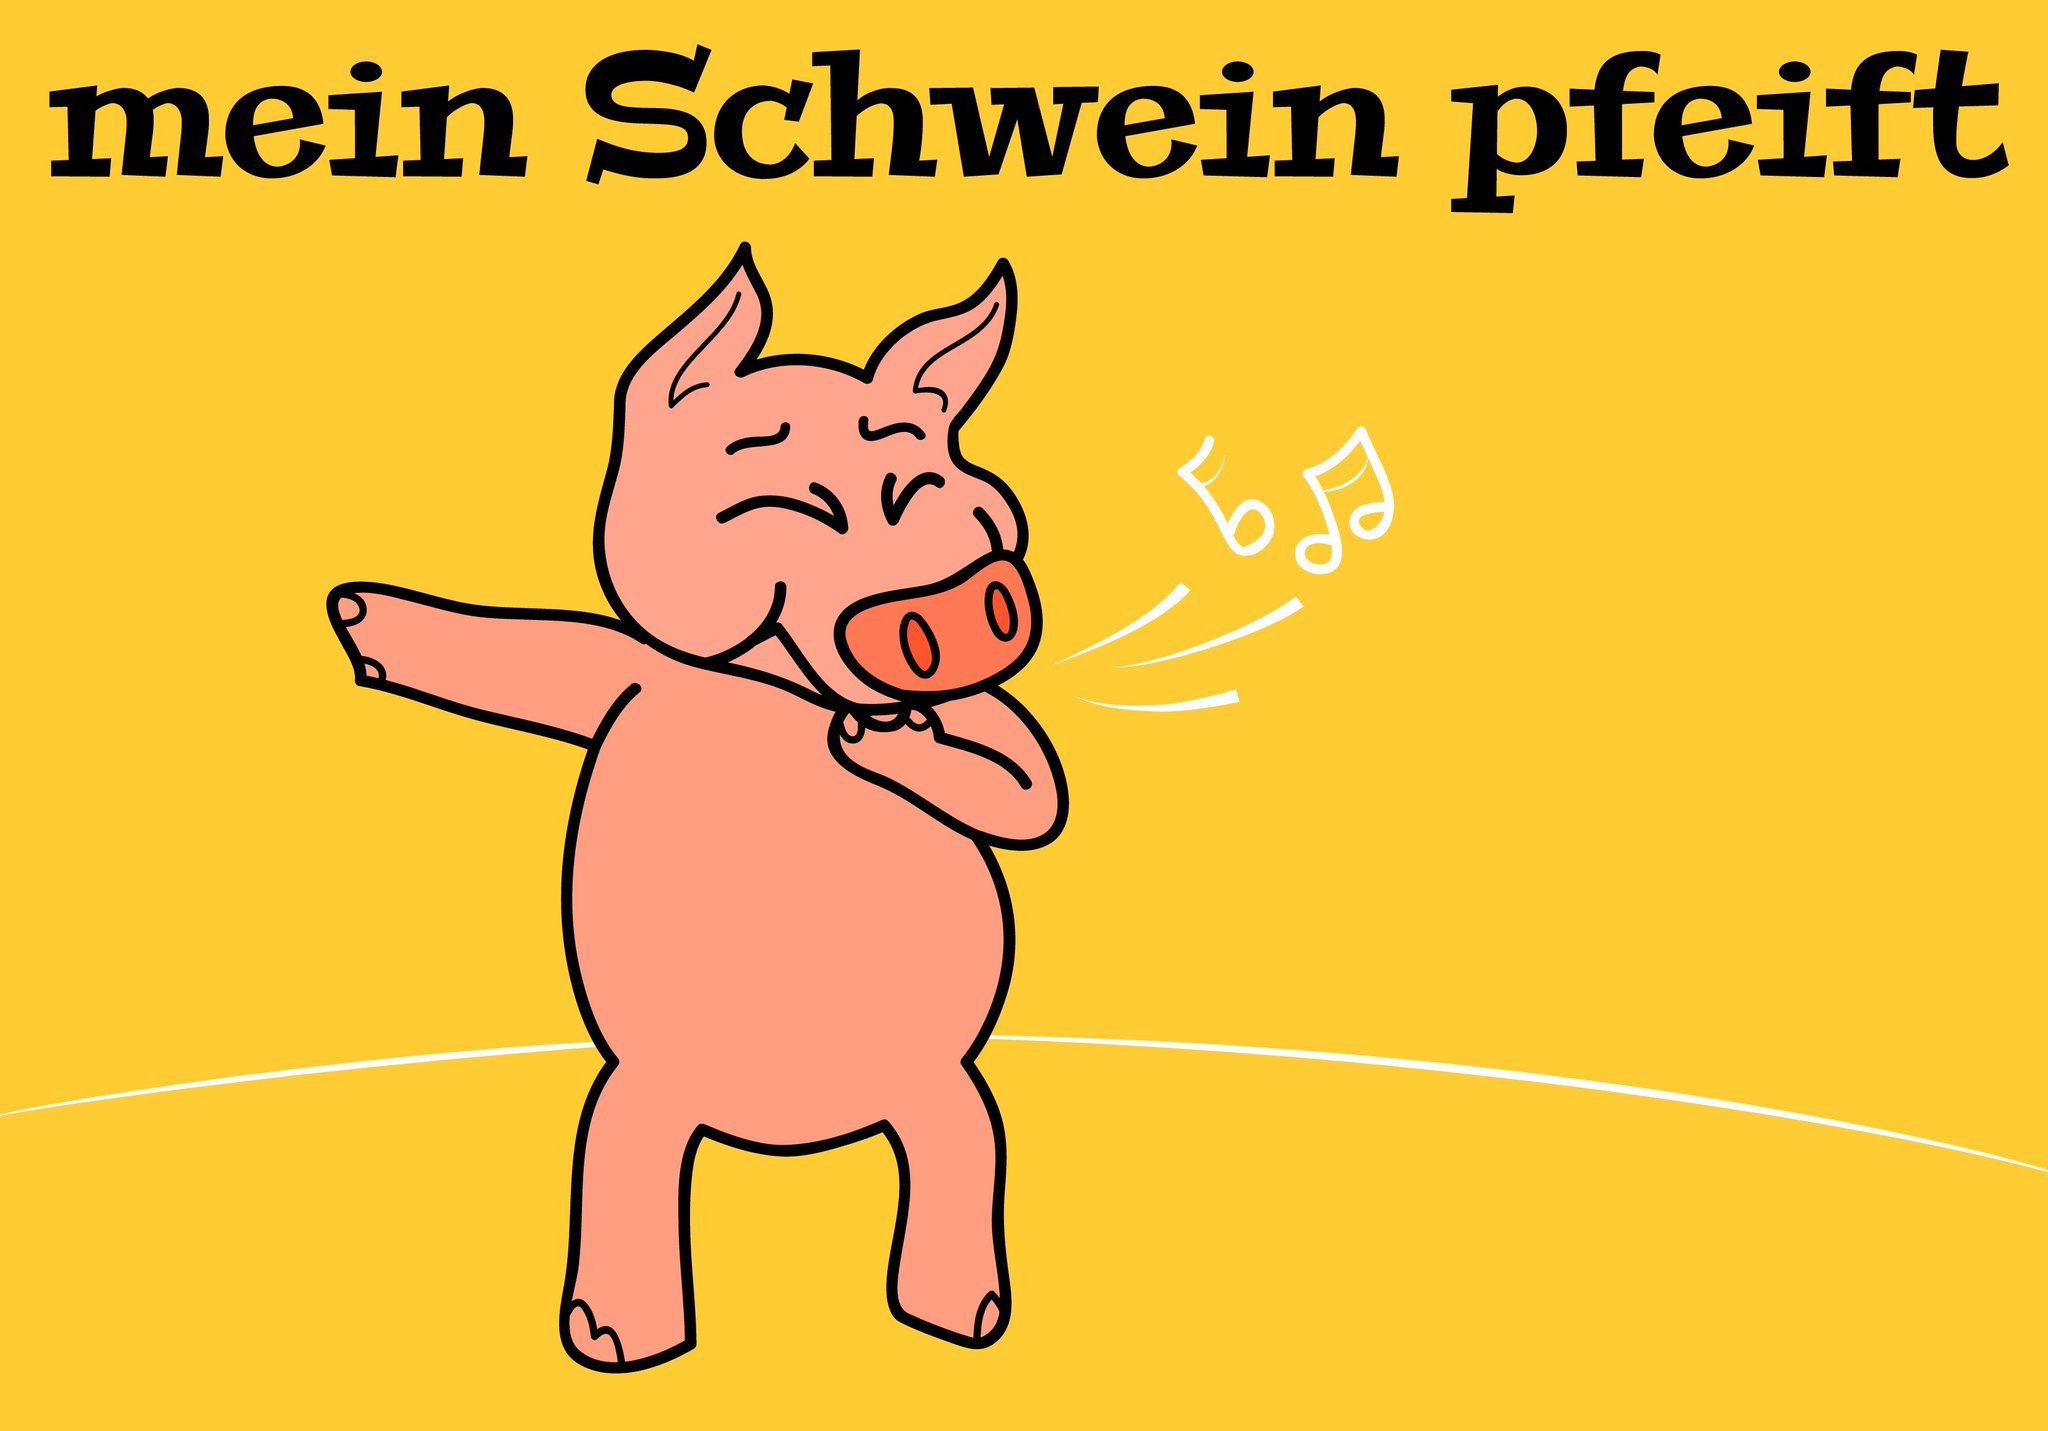 HYG - Learn German on Twitter: "Ich glaube, mein Schwein pfe